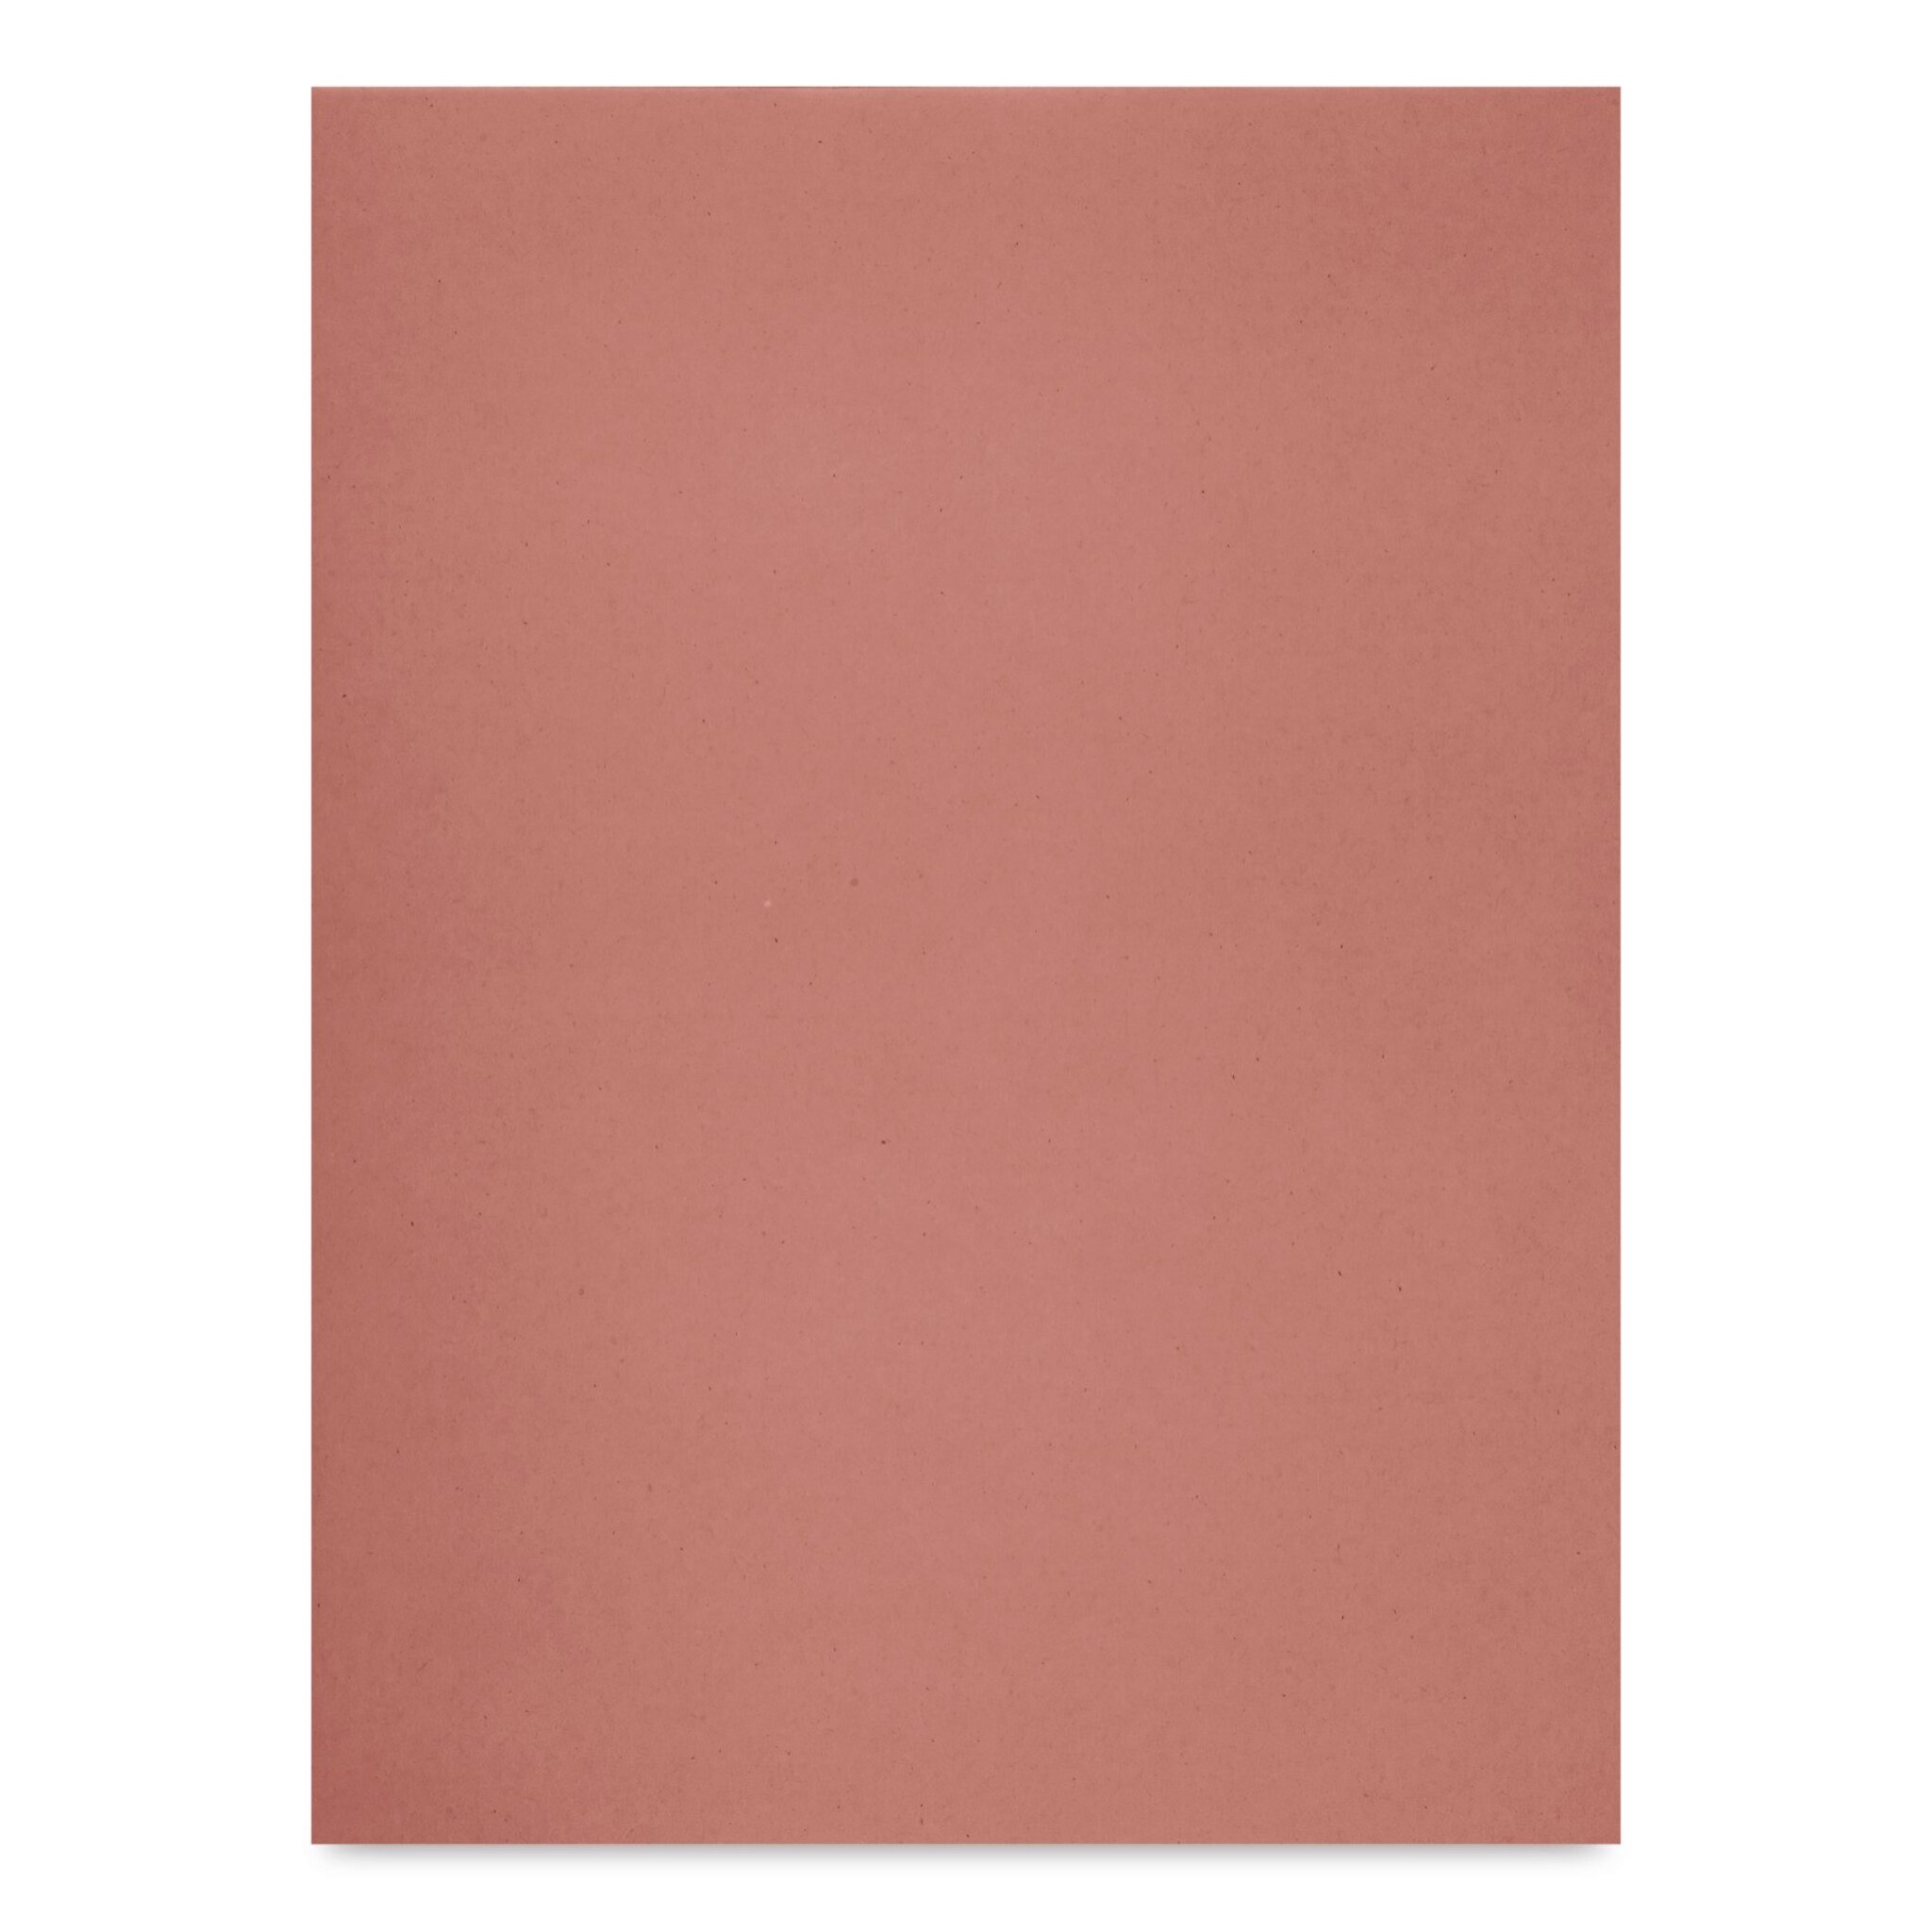 Clairefontaine Pastelmat Sheet - 27-1/2 x 39-1/2, Dark Gray, 1 Sheet 